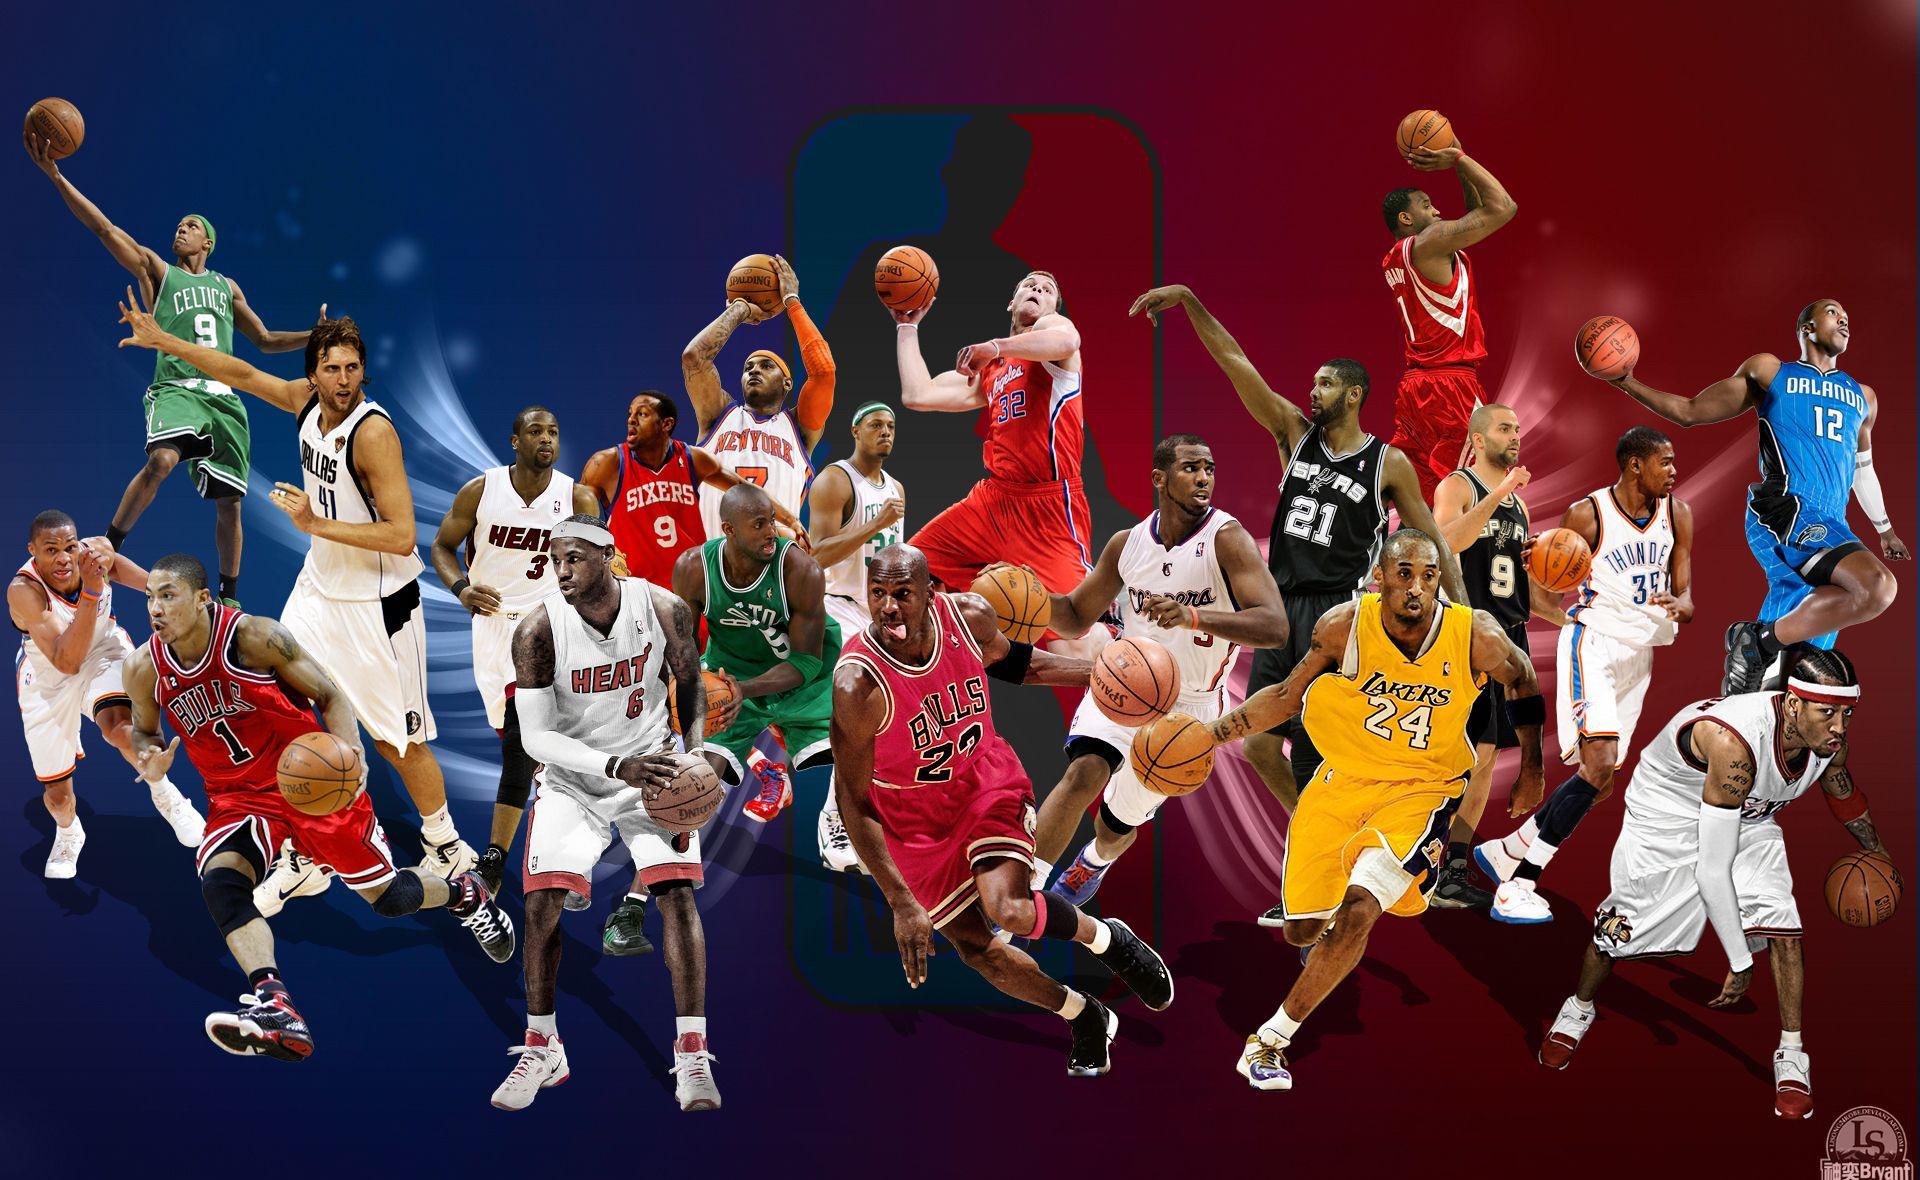 Wallpaper.wiki Basketball Wallpaper Awesome PIC WPC0010428